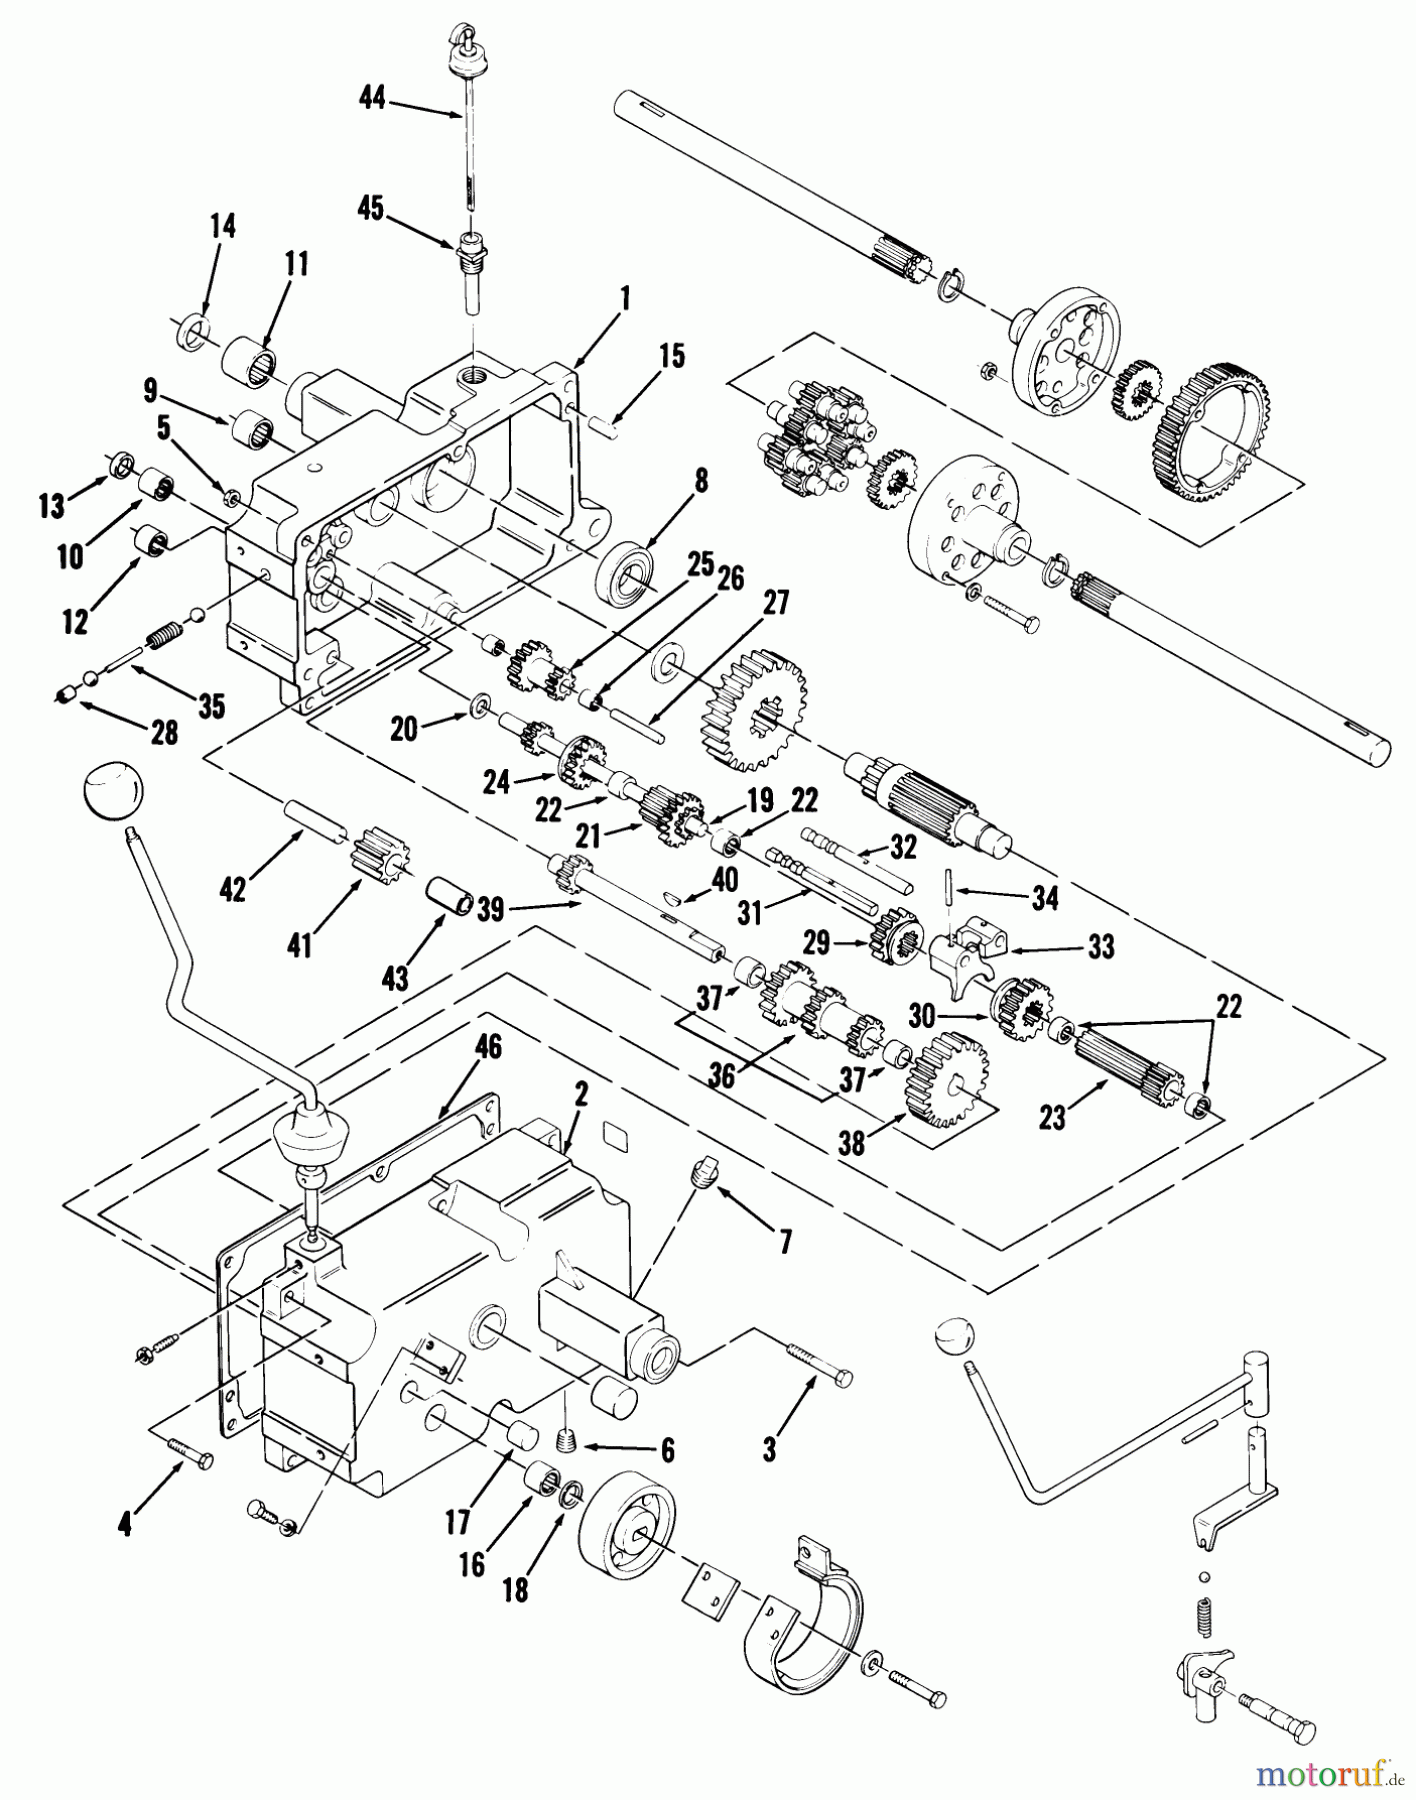  Toro Neu Mowers, Lawn & Garden Tractor Seite 1 01-16K802 (C-165) - Toro C-165 8-Speed Tractor, 1981 MECHANICAL TRANSMISSION-8 SPEED #1